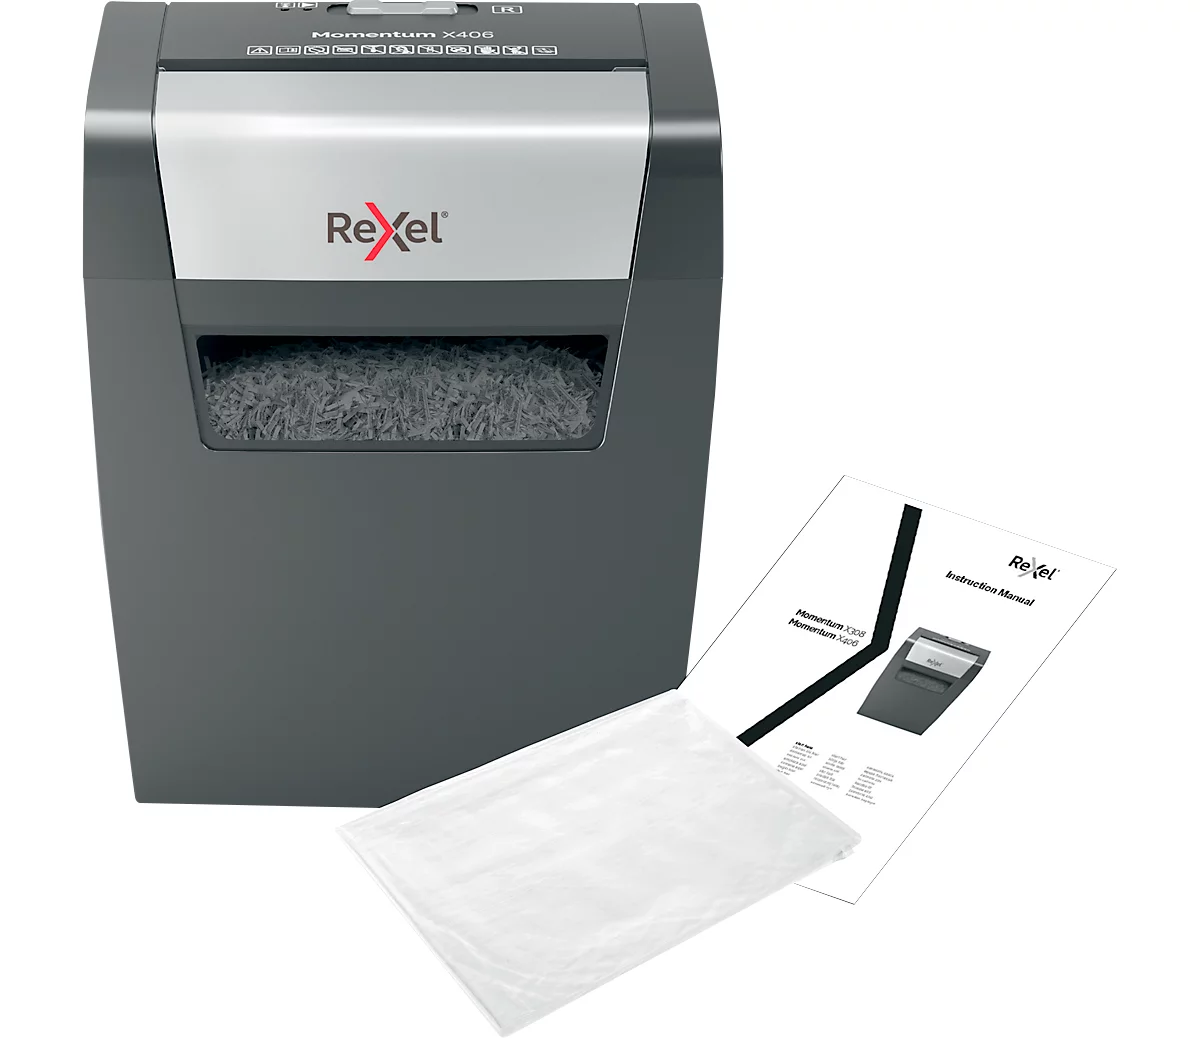 Rexel Momentum X406 Aktenvernichter P4, Partikelschnitt 4 x 28 mm, 15l, 6 Blatt Schnittleistung, schwarz